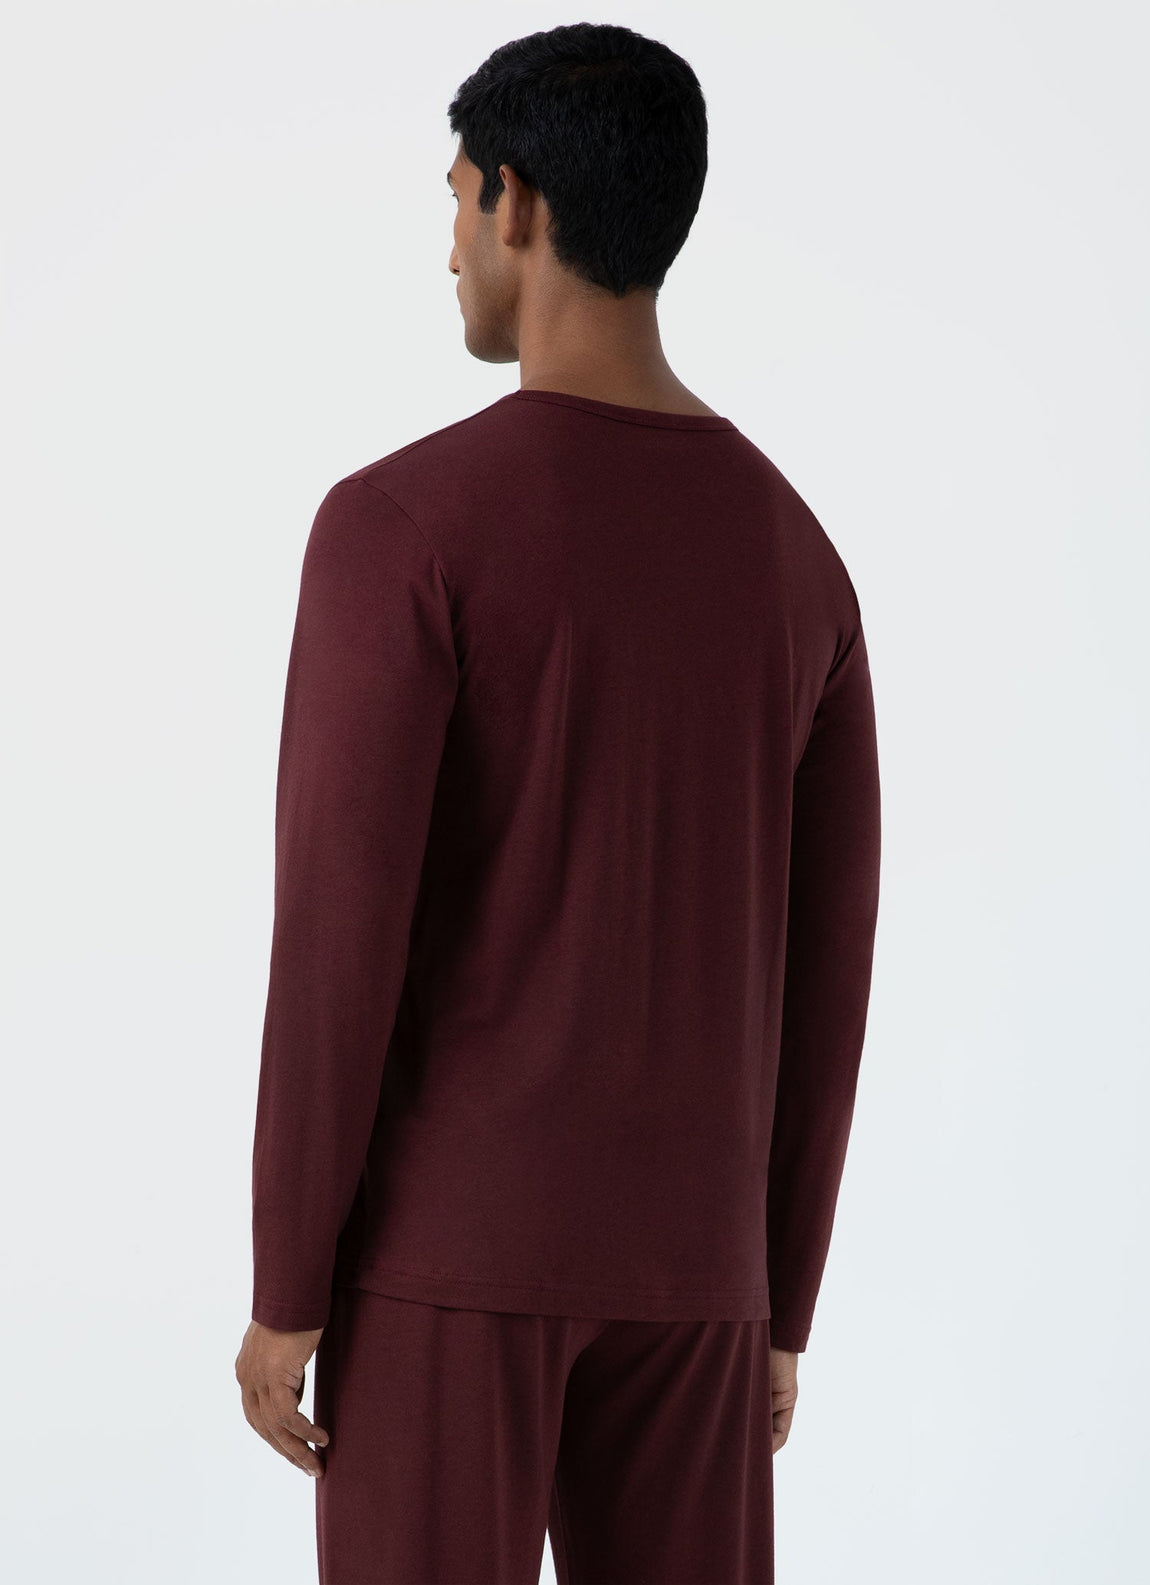 Men's Cotton Modal Lounge Long Sleeve T-shirt in Maroon